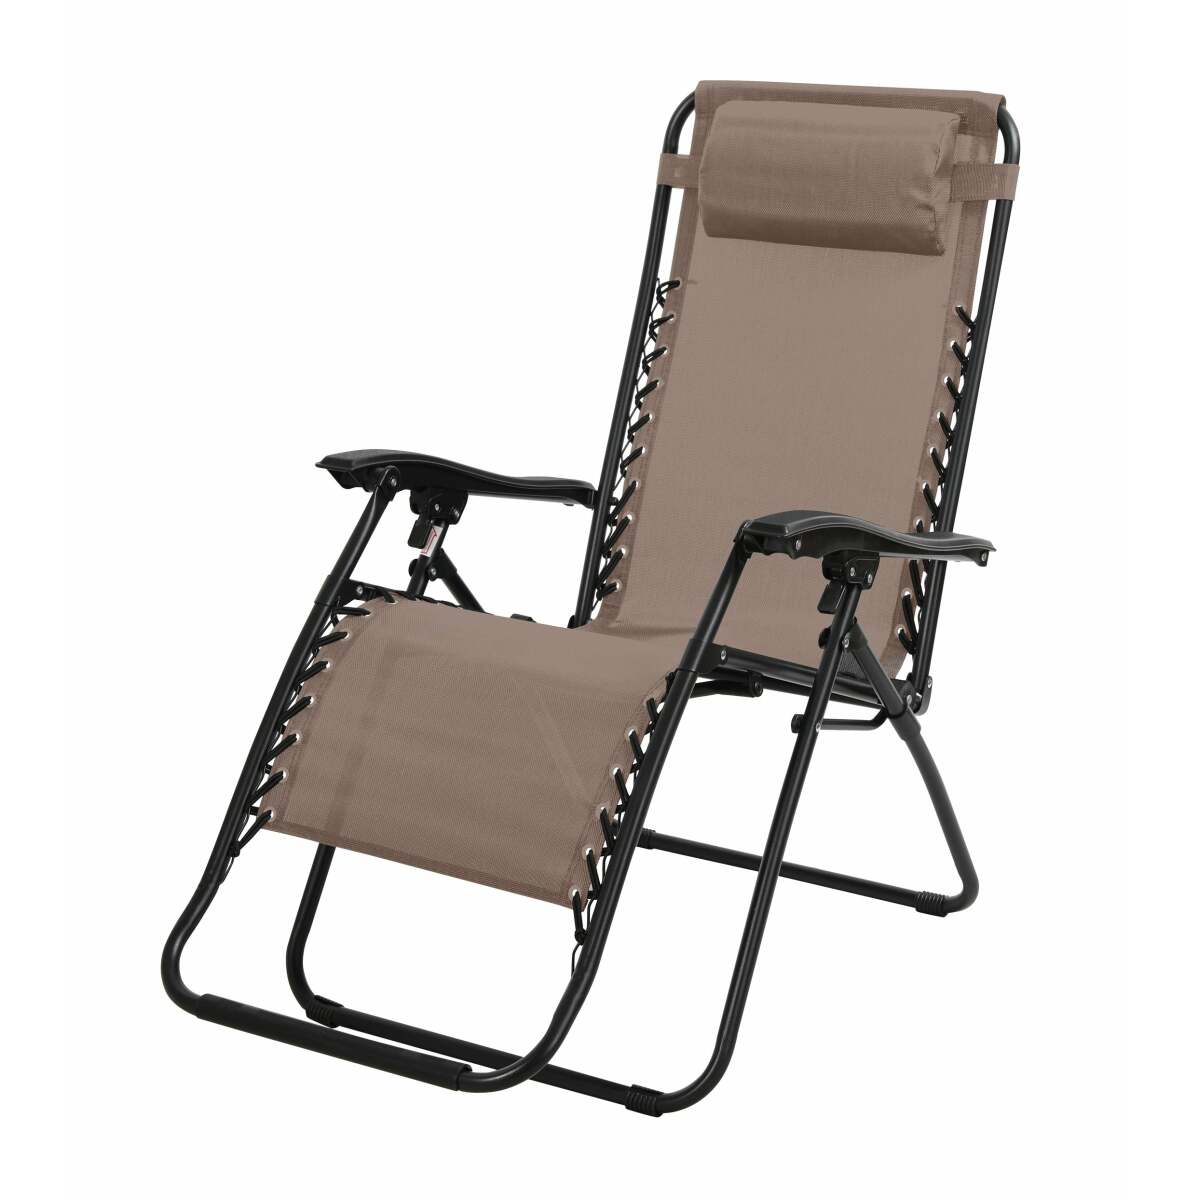 sunnydays le playa chaise longue fauteuil relax taupe pliable reglable l176x64 x h108/46cm+sunnydays  taupe